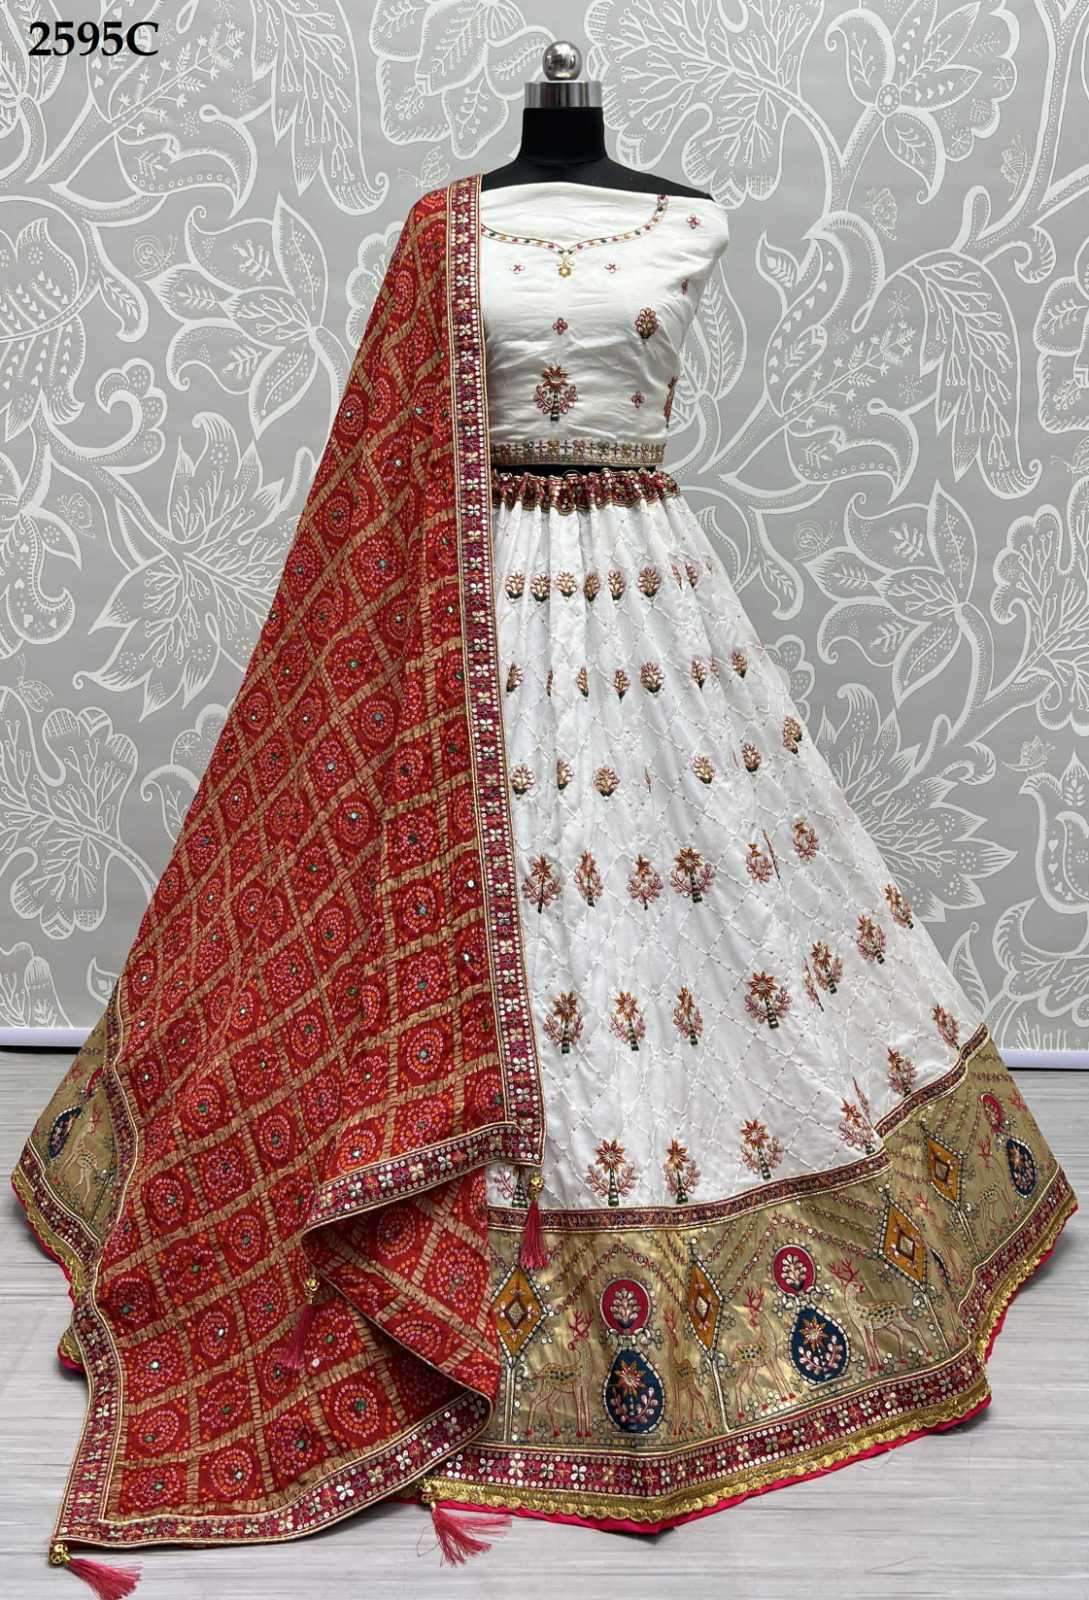 Anjani Art 2595 Colors Tradition Wear Wedding Function Lehenga Choli